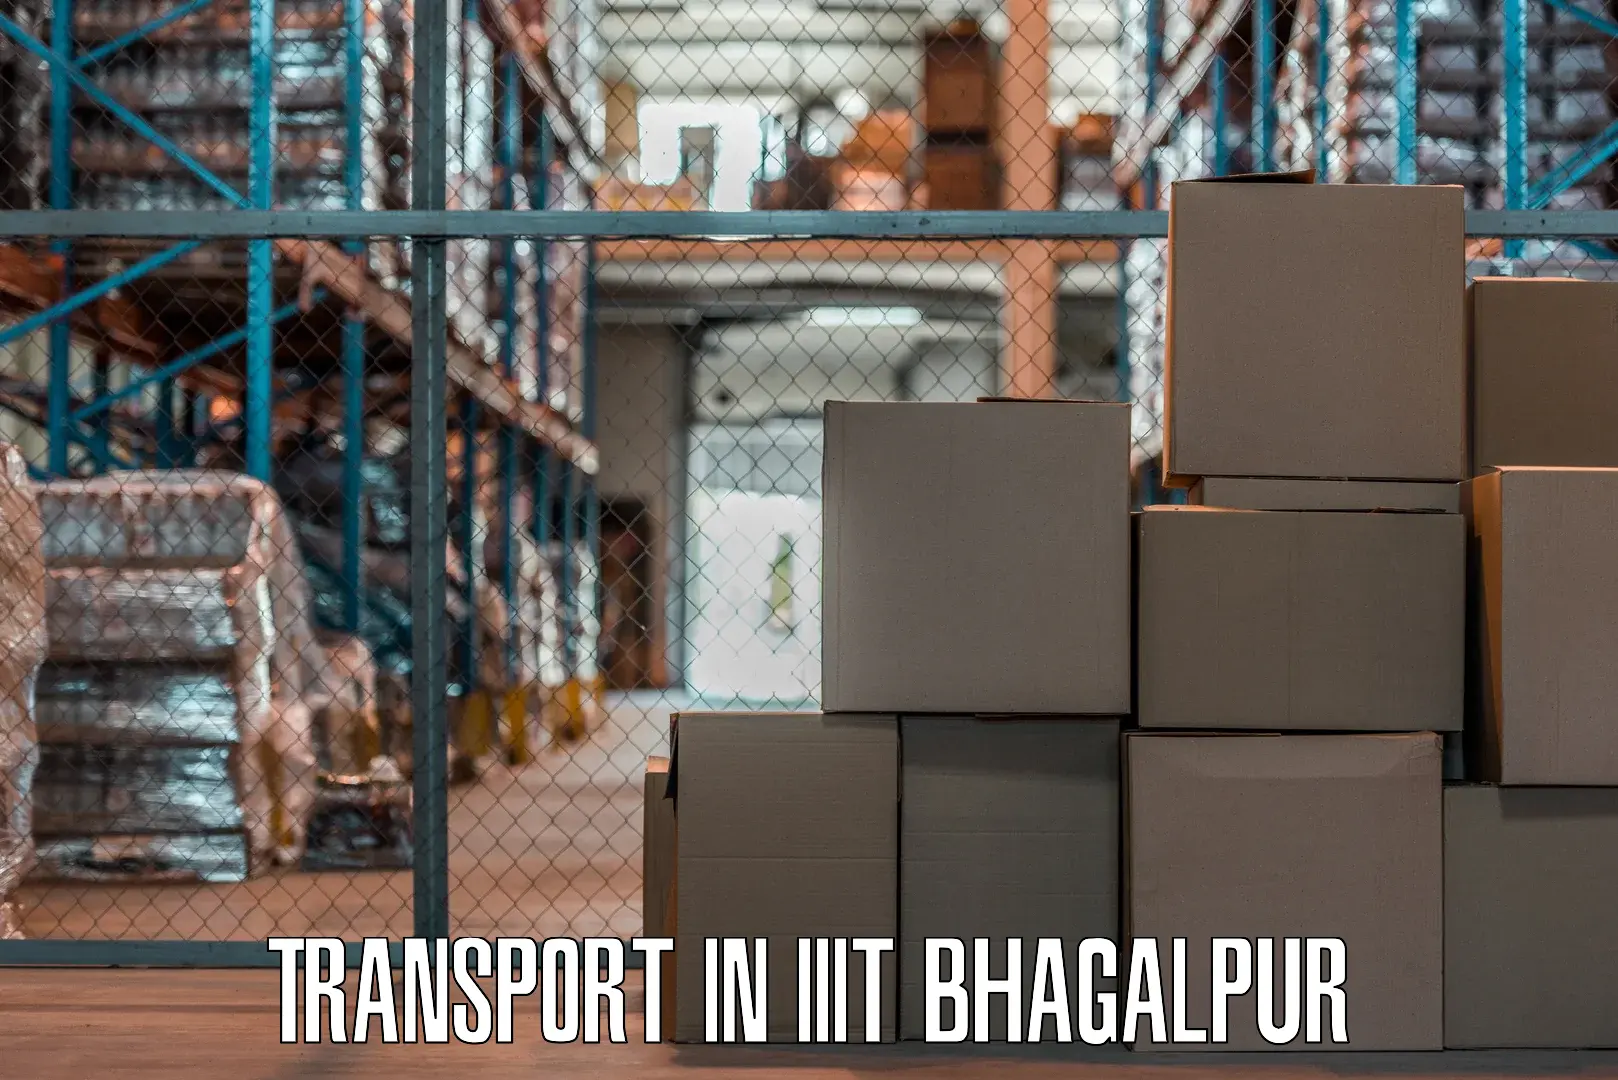 Online transport booking in IIIT Bhagalpur